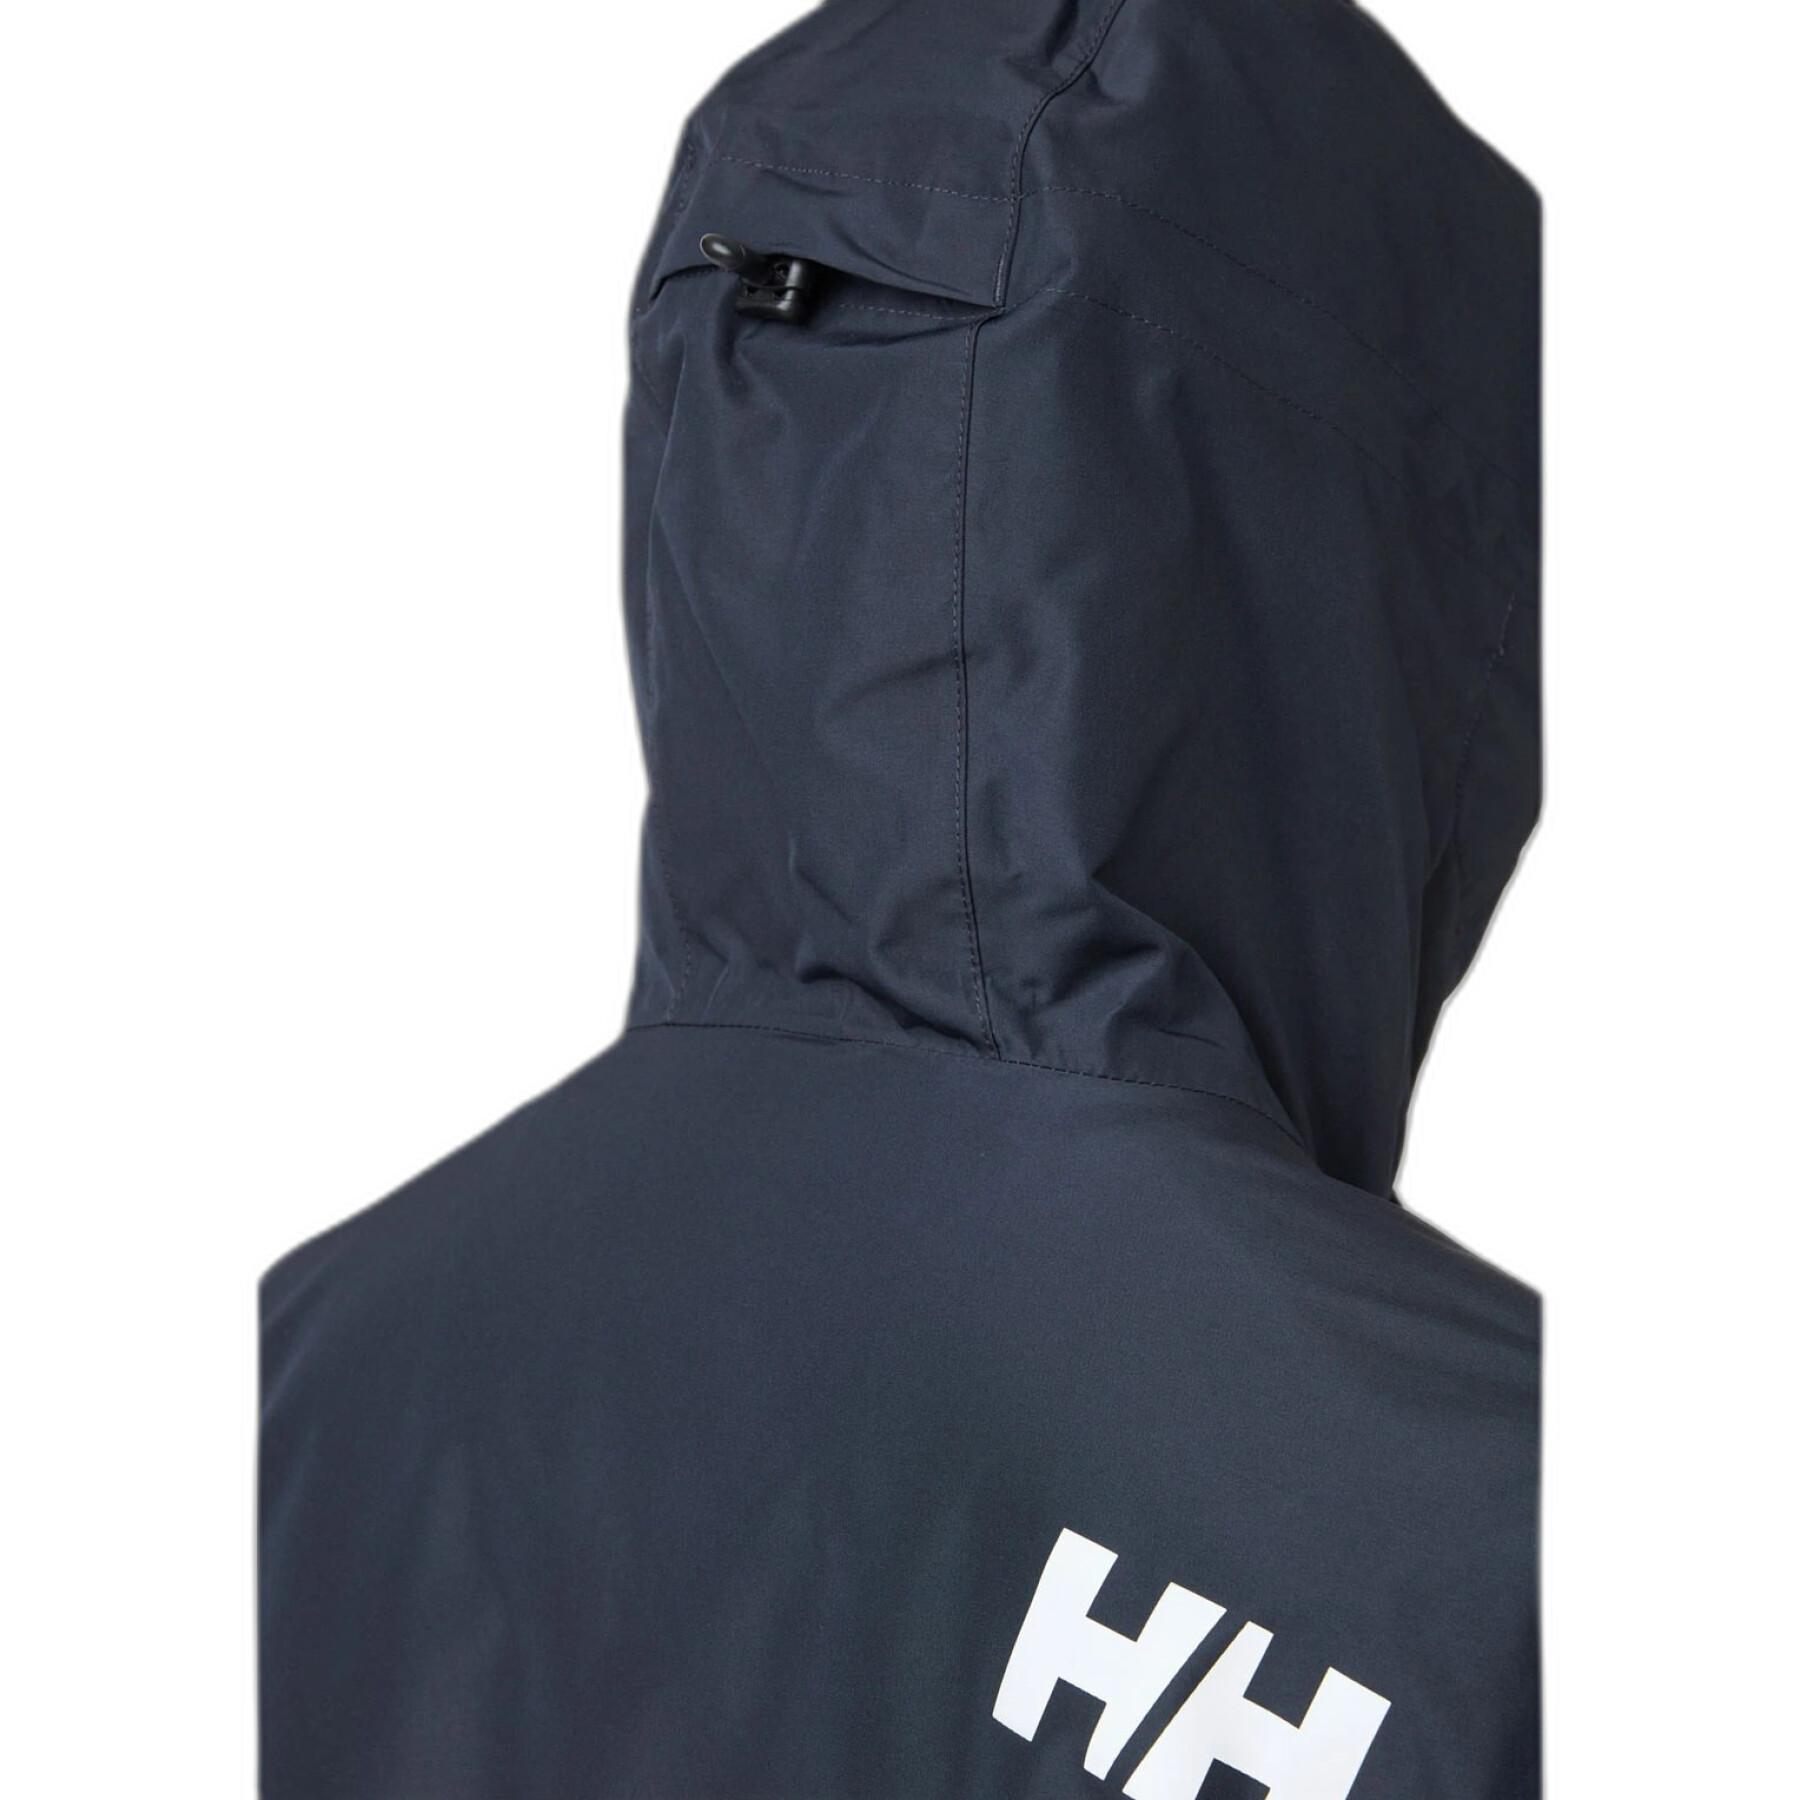 Waterproof jacket Helly Hansen Rigging